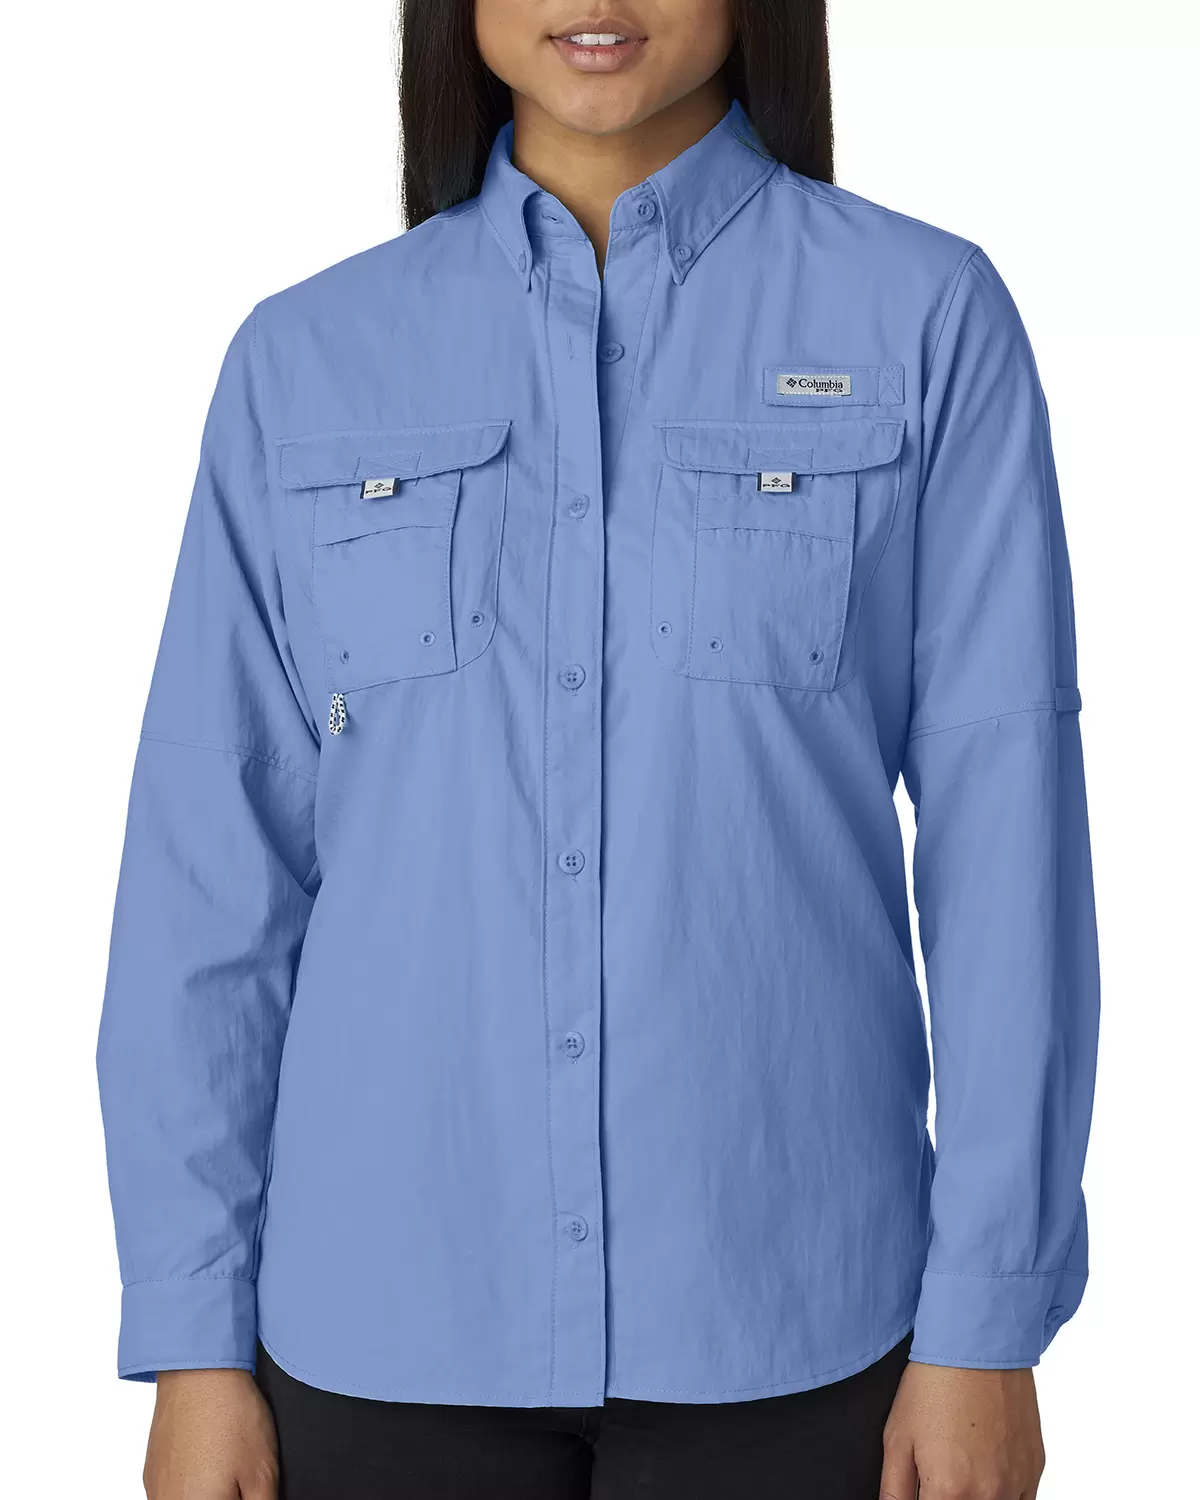 Columbia Sportswear 7314 Ladies' Bahama™ Long-Sleeve Shirt - From $38.48